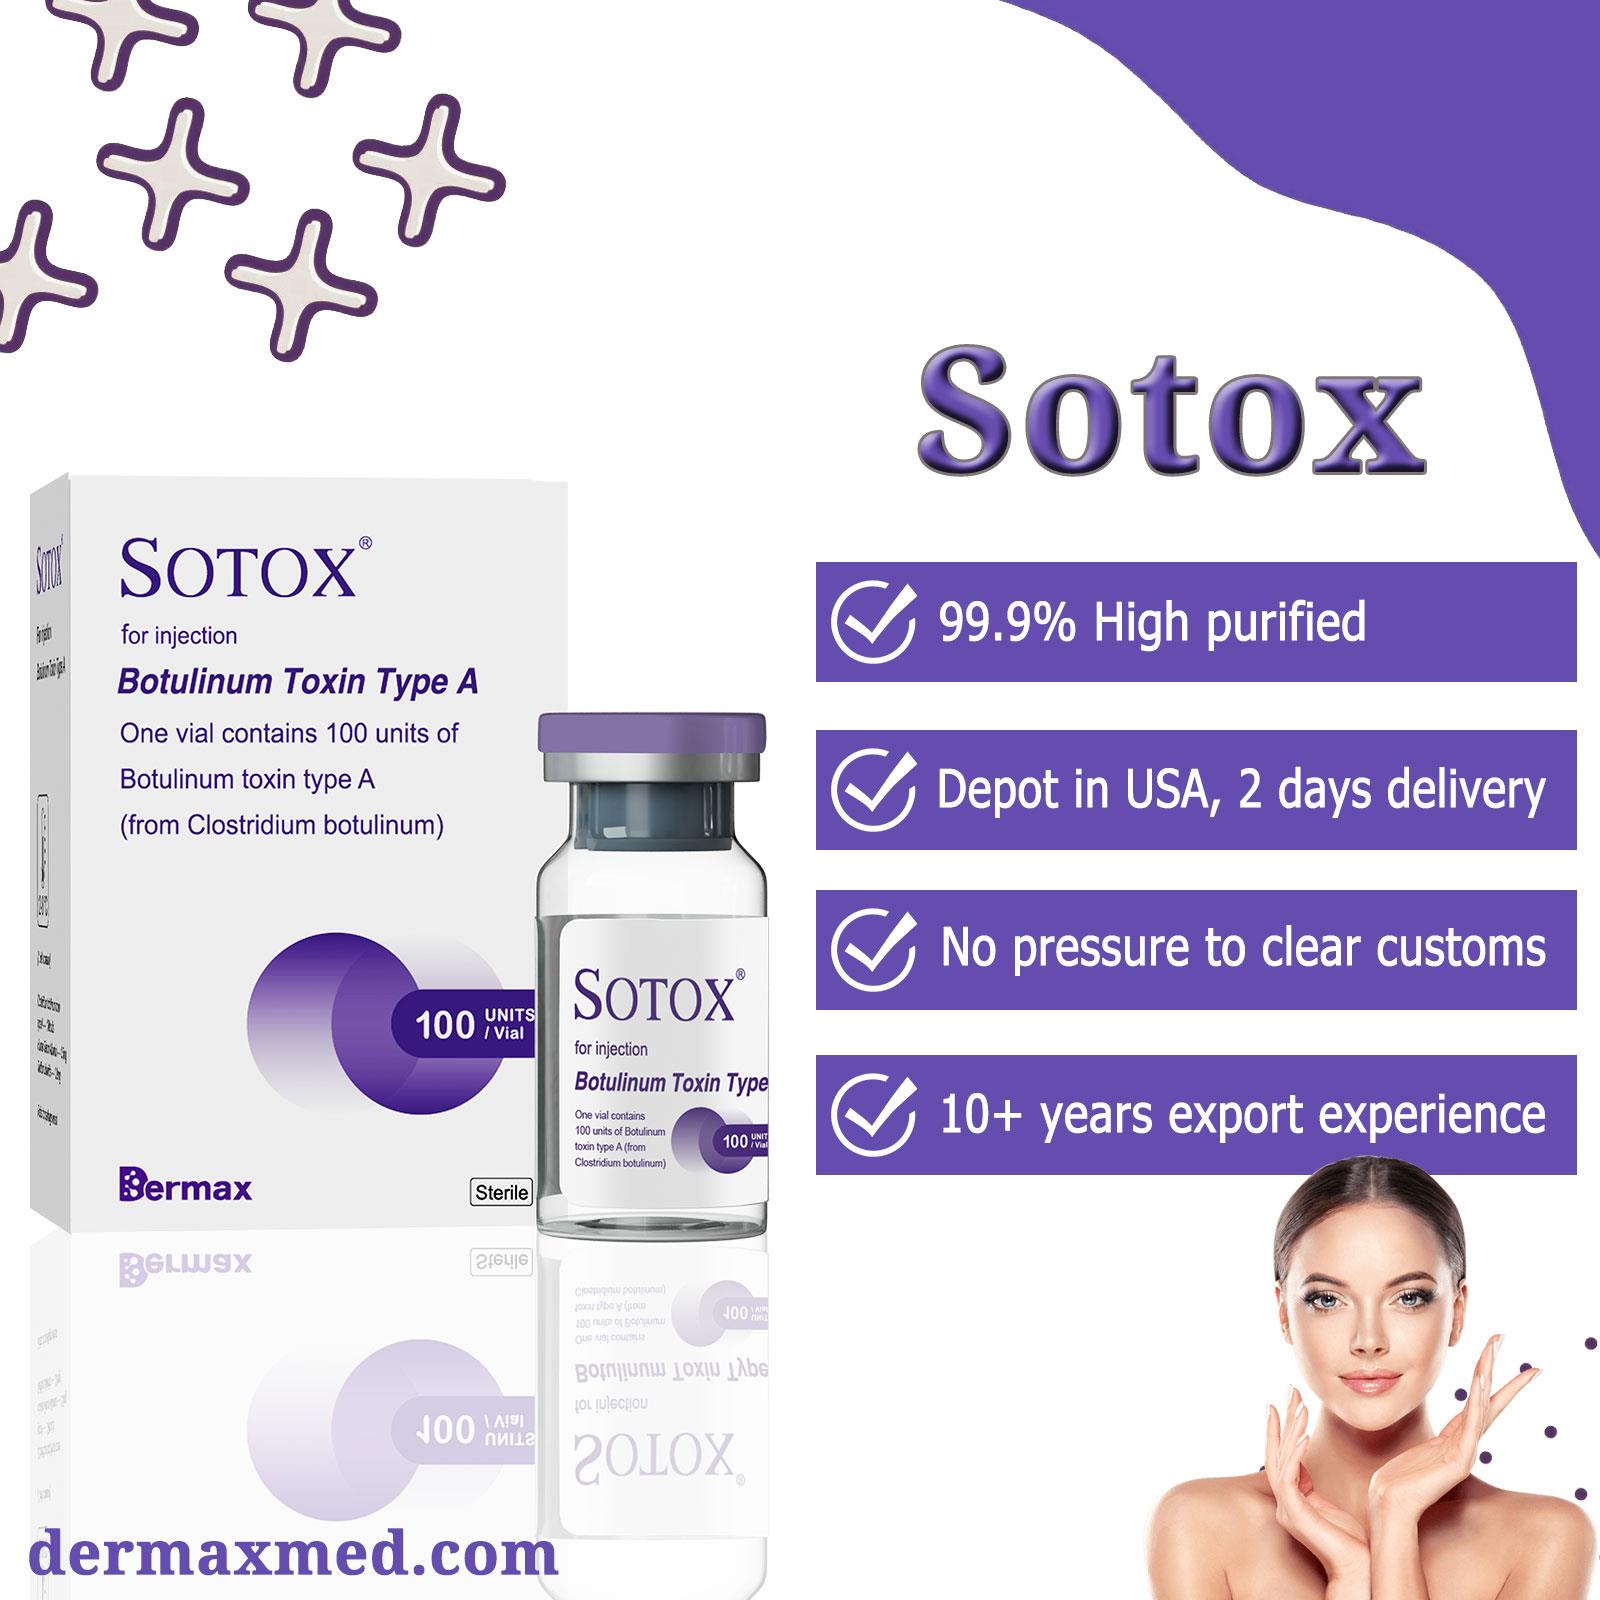 Dermax Offer SOTOX Botox Manufacturer Coupon